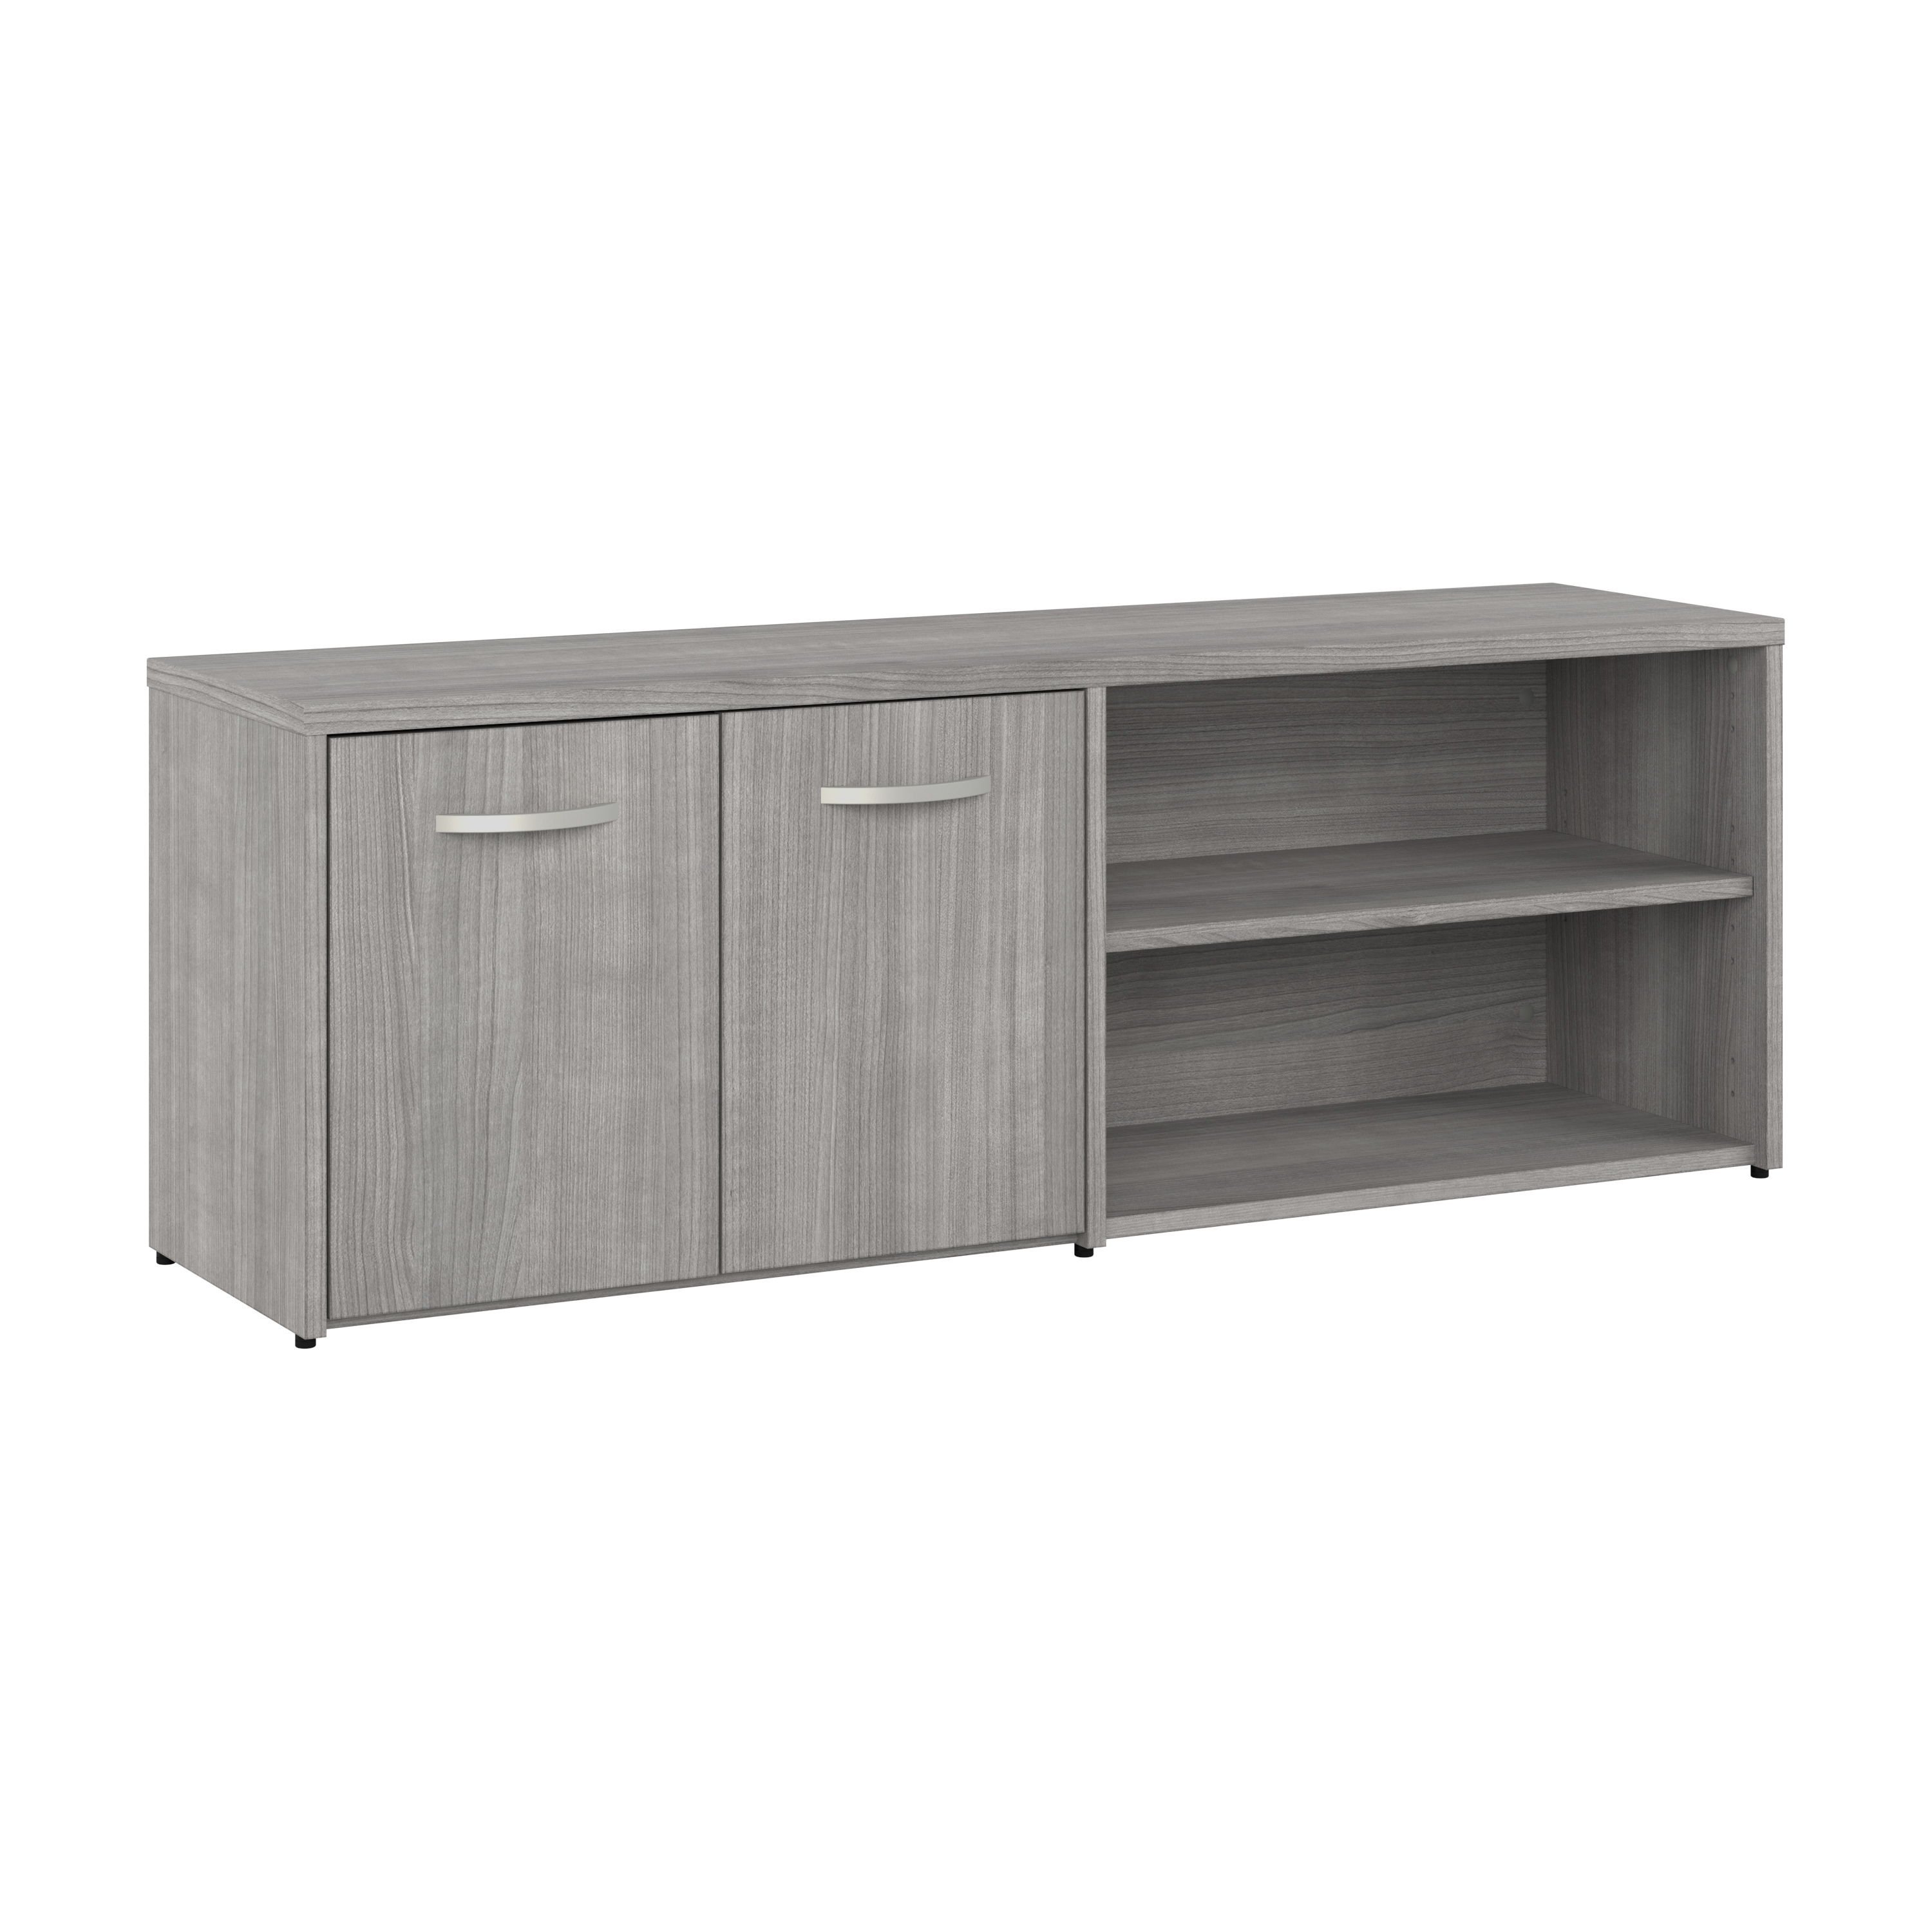 Shop Bush Business Furniture Studio A Low Storage Cabinet with Doors and Shelves 02 SDS160PG-Z #color_platinum gray